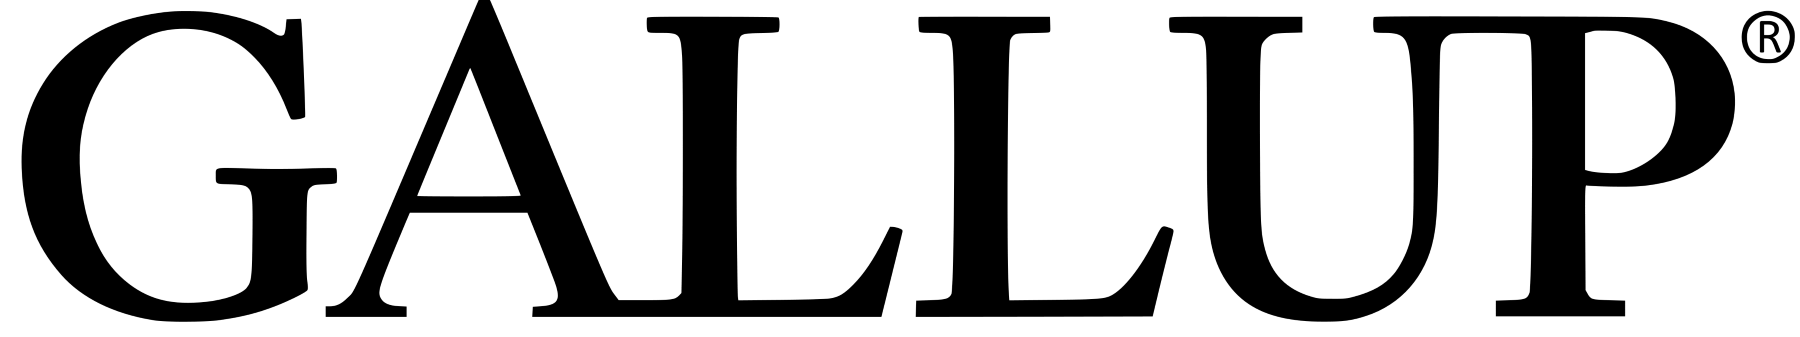 Gallup Logo - Gallup – Logos, brands and logotypes